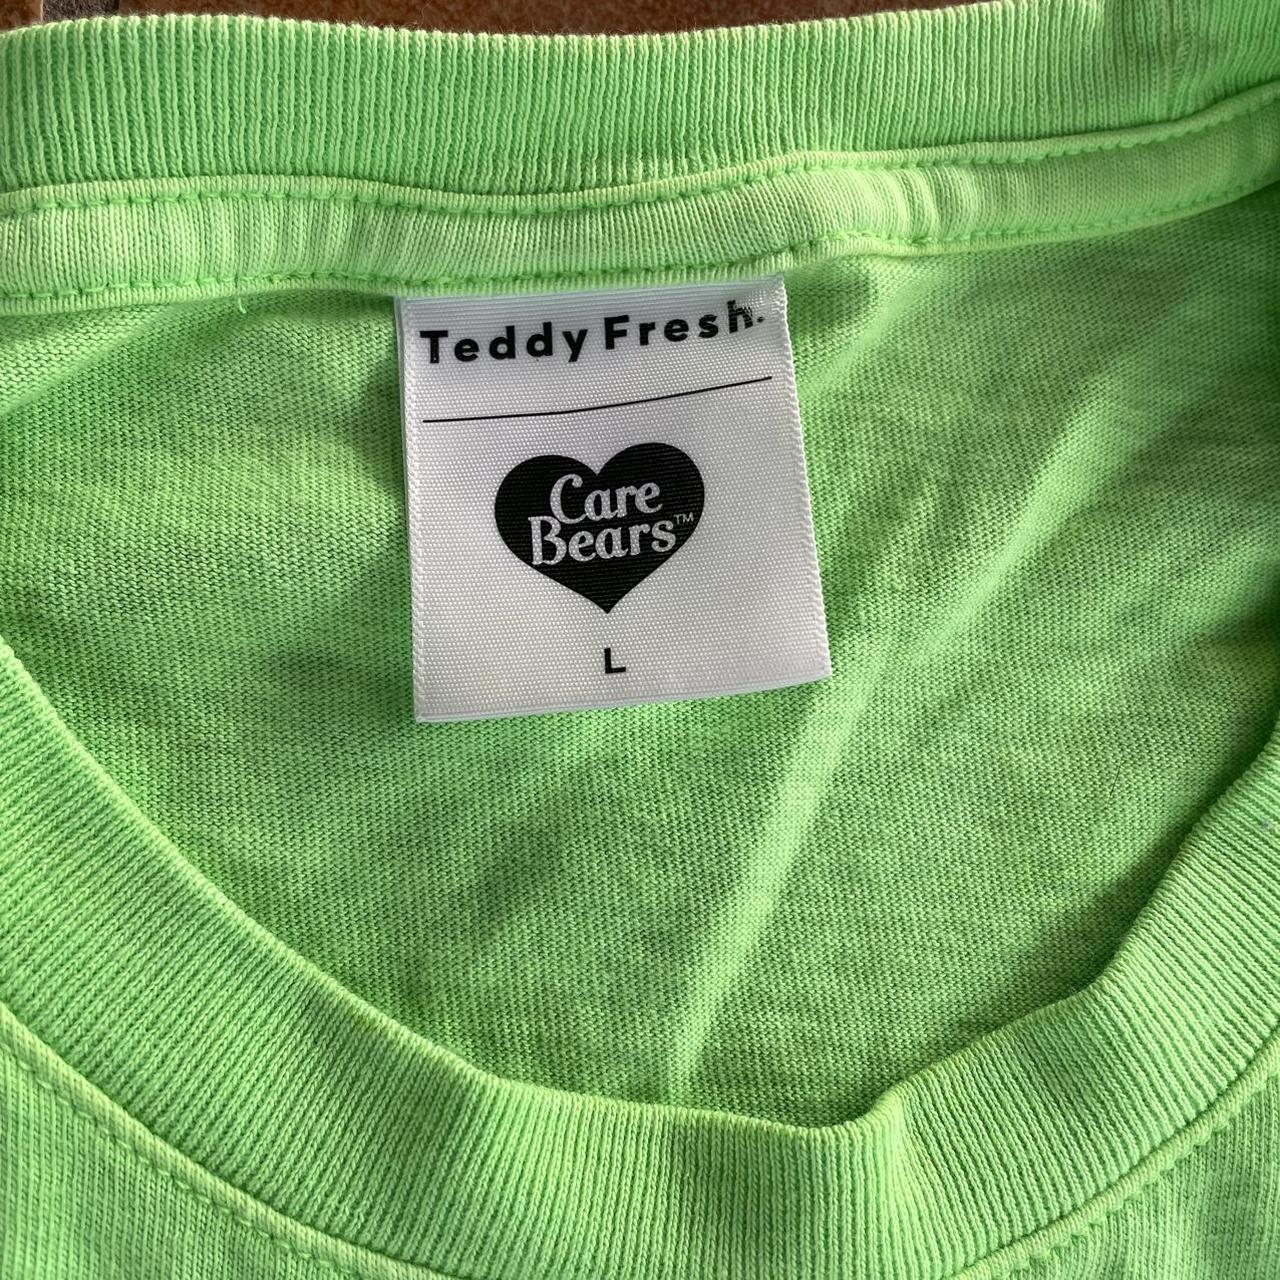 Teddy Fresh Care Bears Collab Streetwear Shirt 205 Depop 